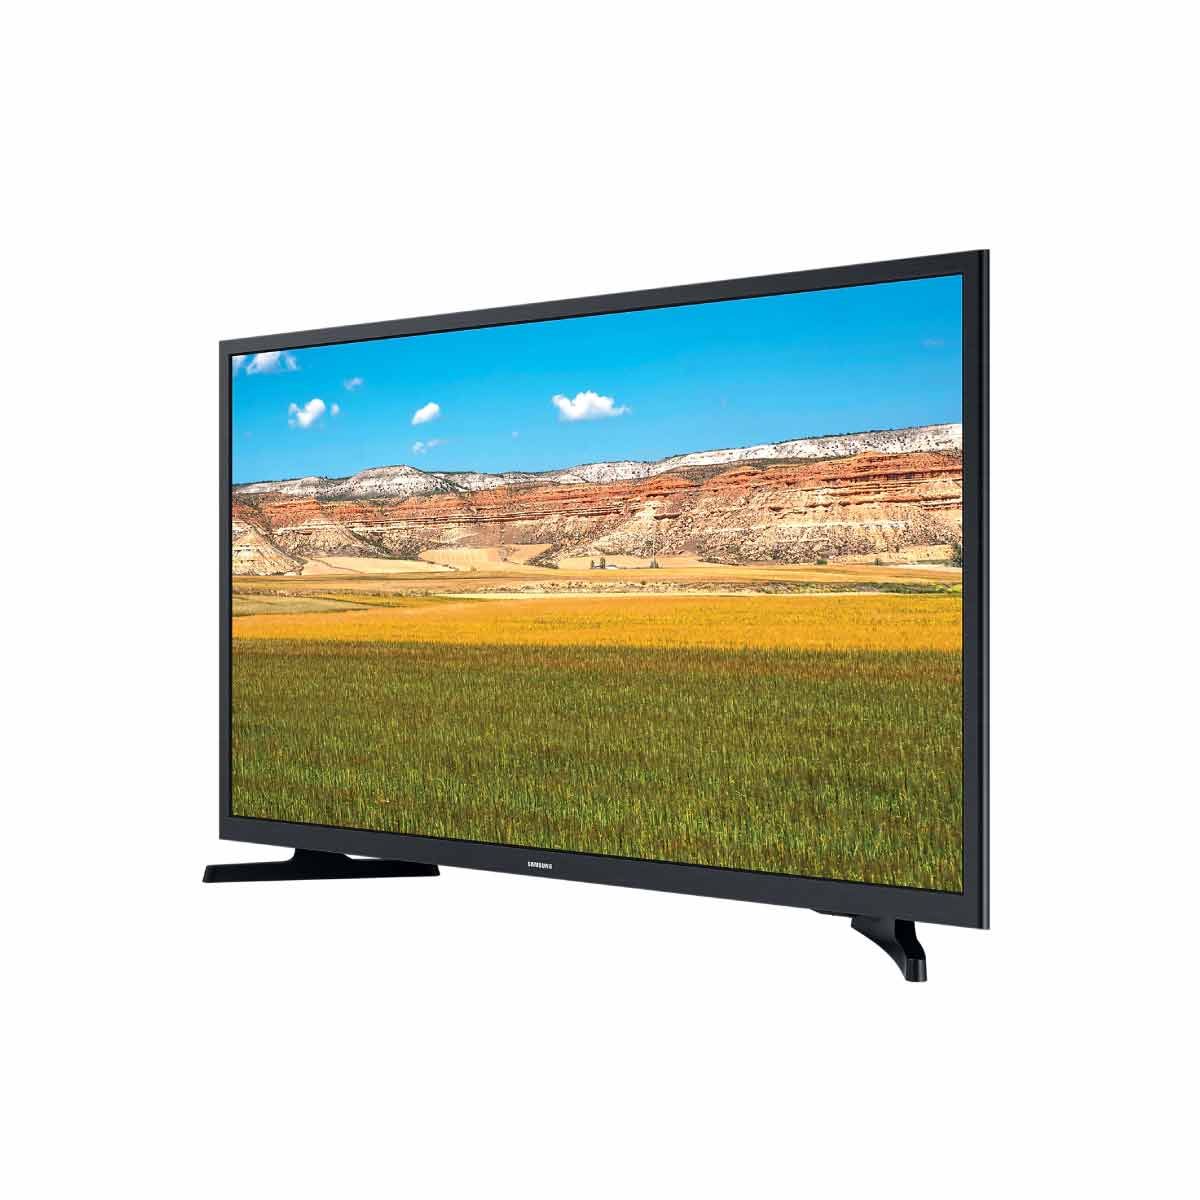 SAMSUNG LED Smart TV รุ่น UA32T4202AKXXT สมาร์ททีวีขนาด 32 นิ้ว